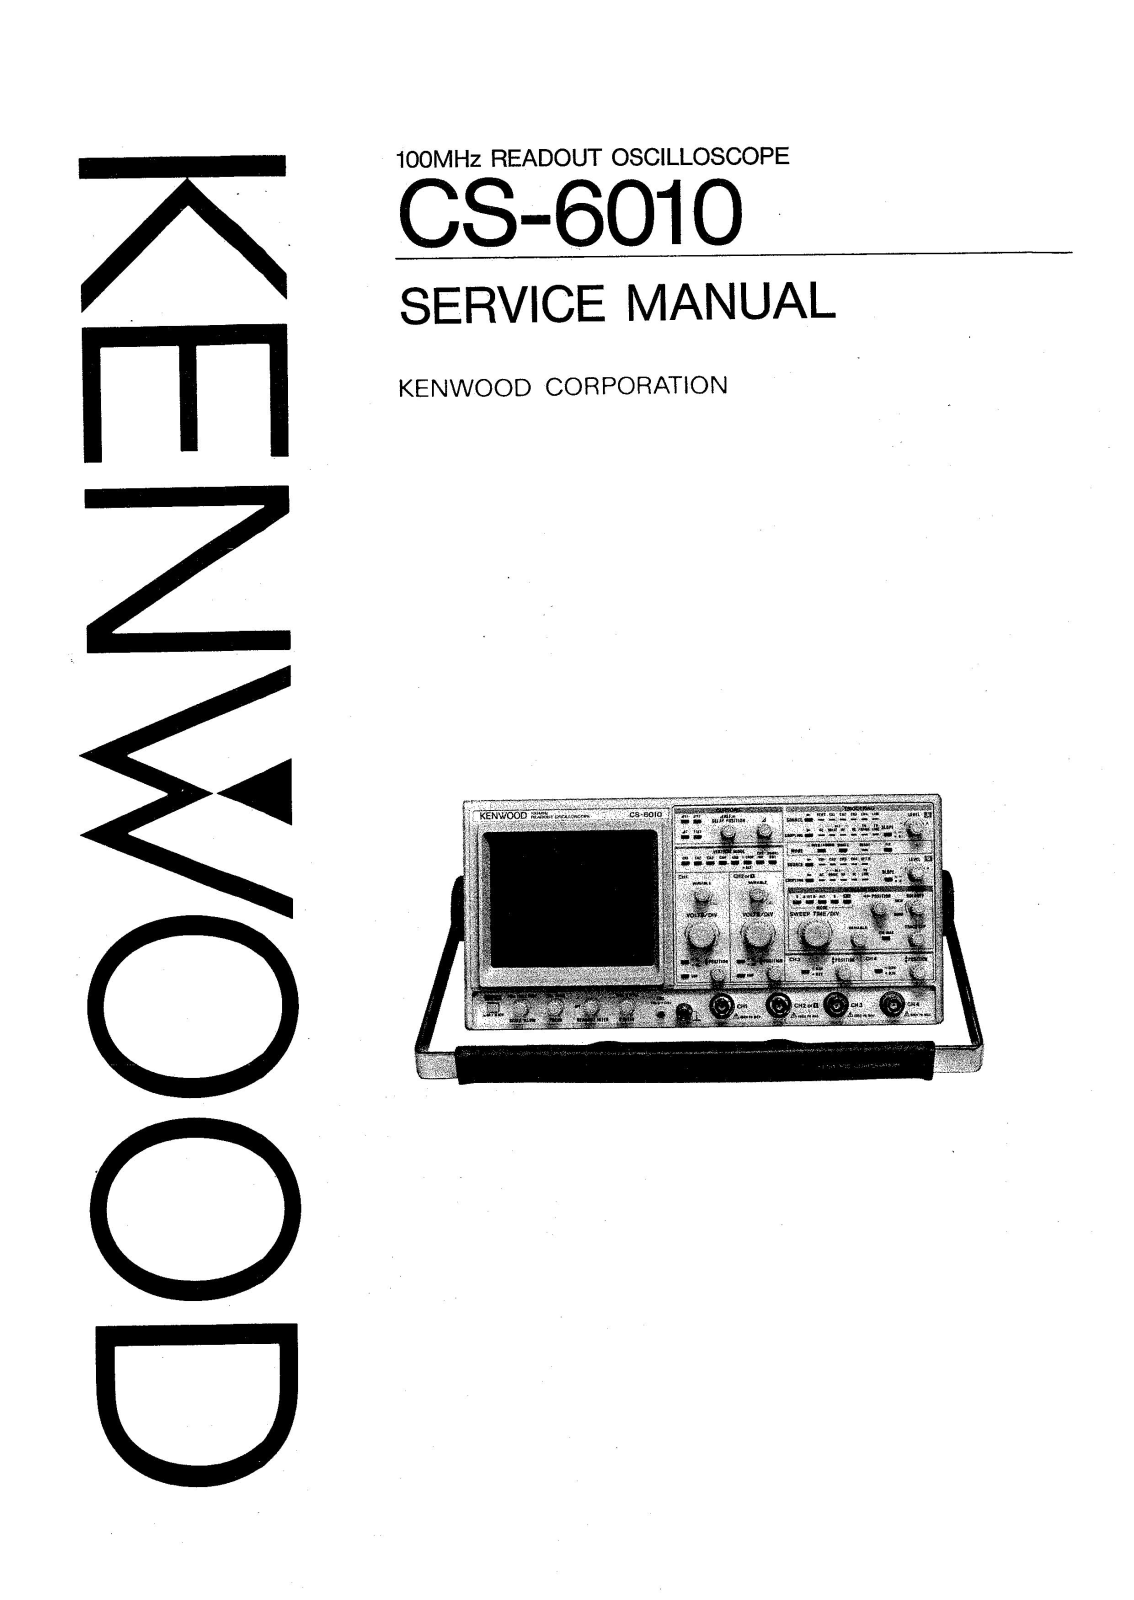 Kenwood CS-6010 Service Manual